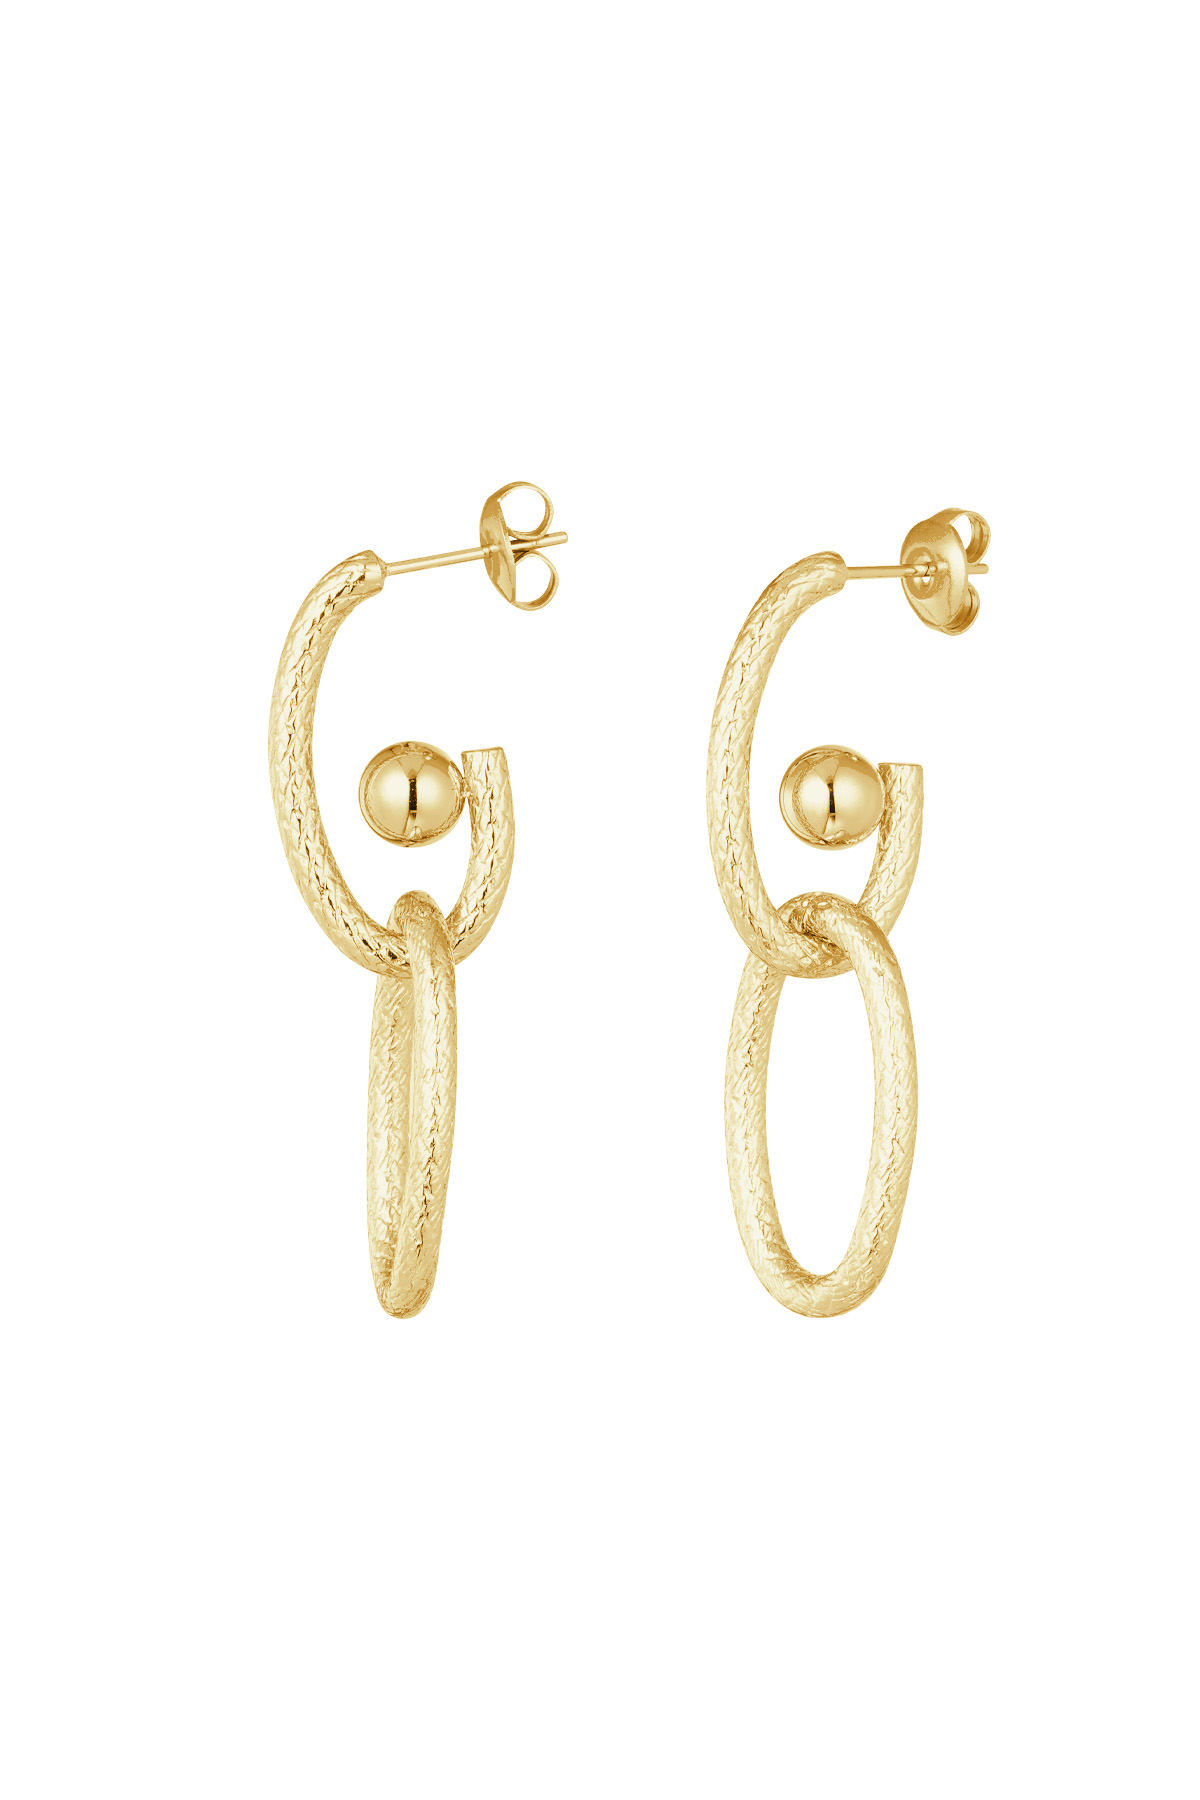 Aesthetic link earrings - gold h5 